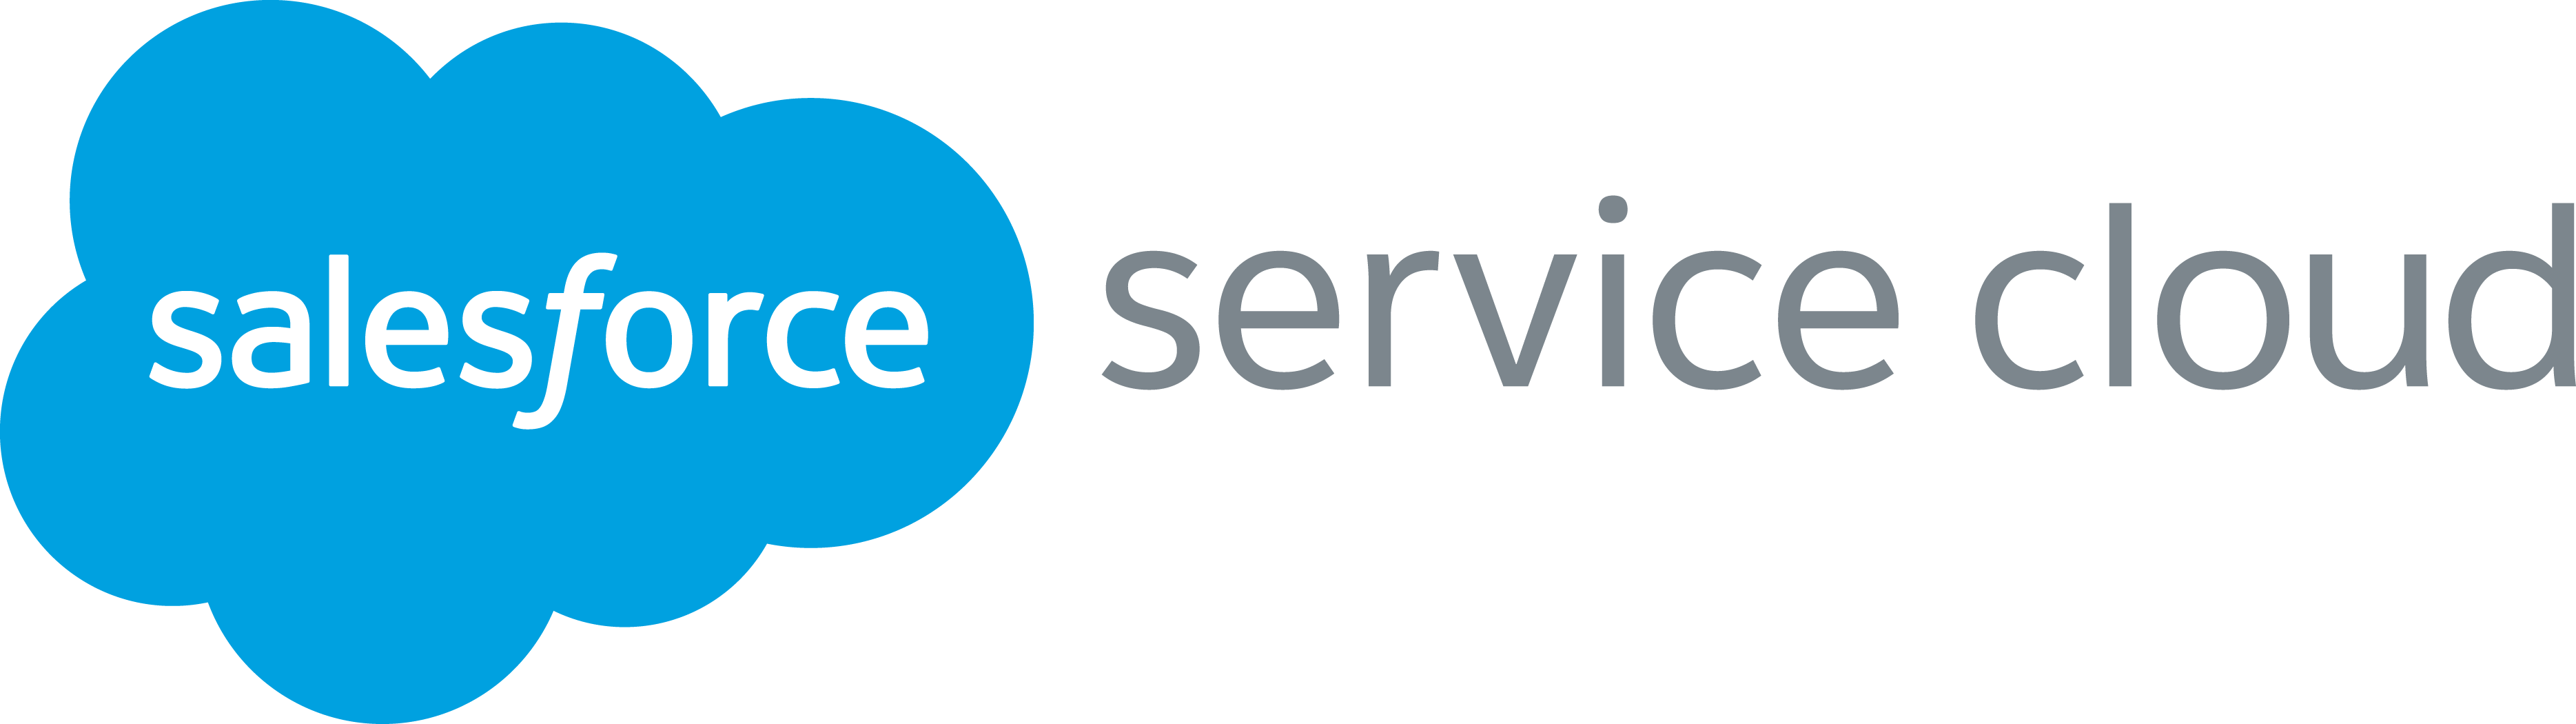 Google Cloud Logo - Salesforce Service Cloud Logo (1)